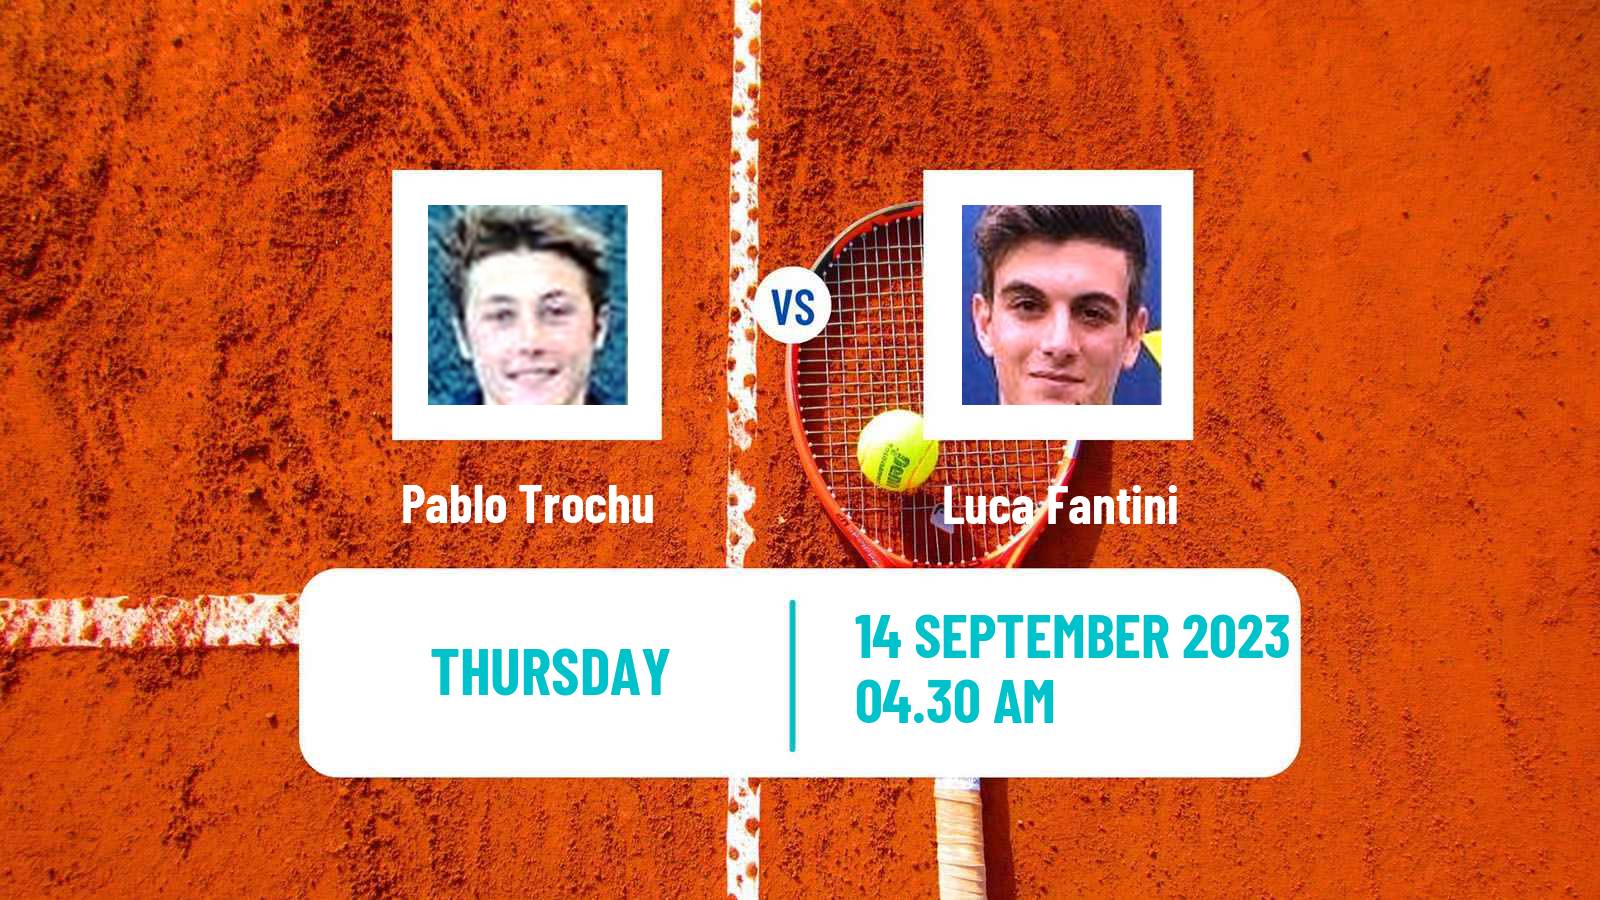 Tennis ITF M15 Monastir 37 Men Pablo Trochu - Luca Fantini